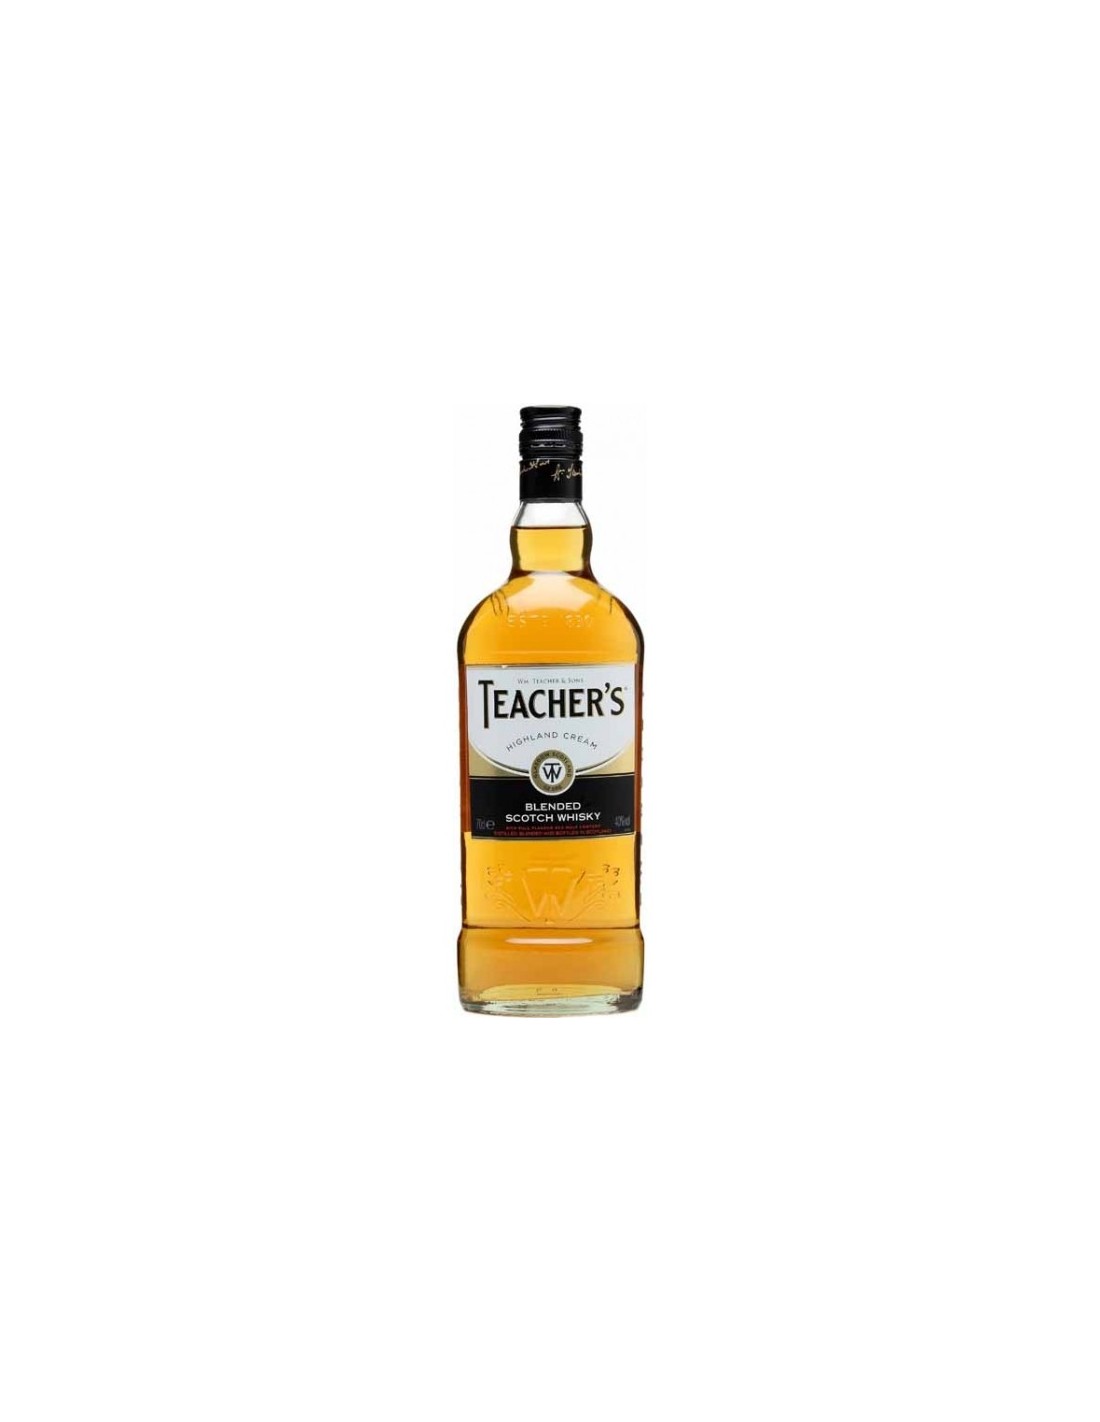 Whisky Teacher’s, 0.7L, 40% alc., Scotia alcooldiscount.ro